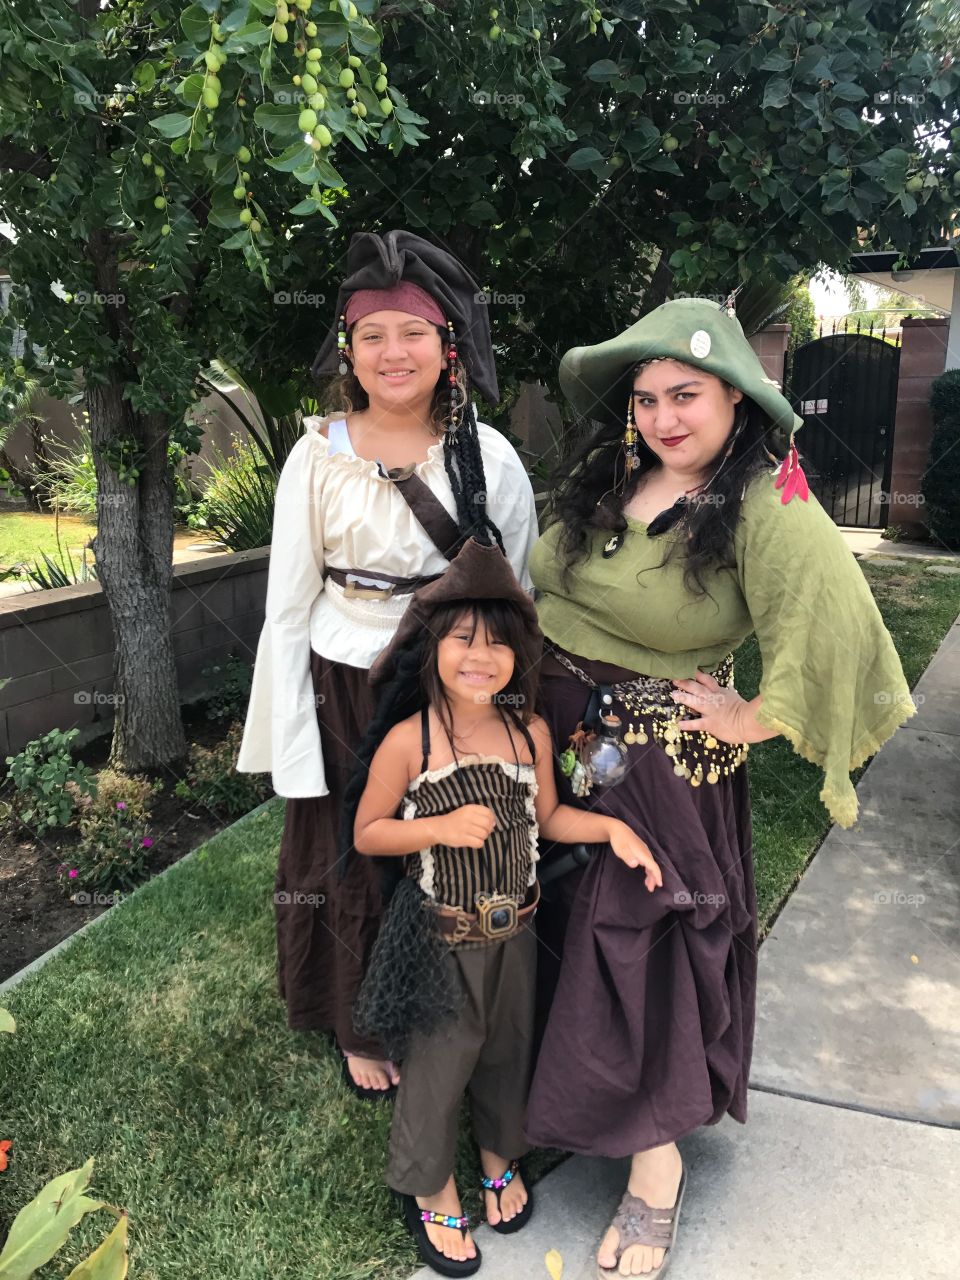 Family fun Pirate Adventure!